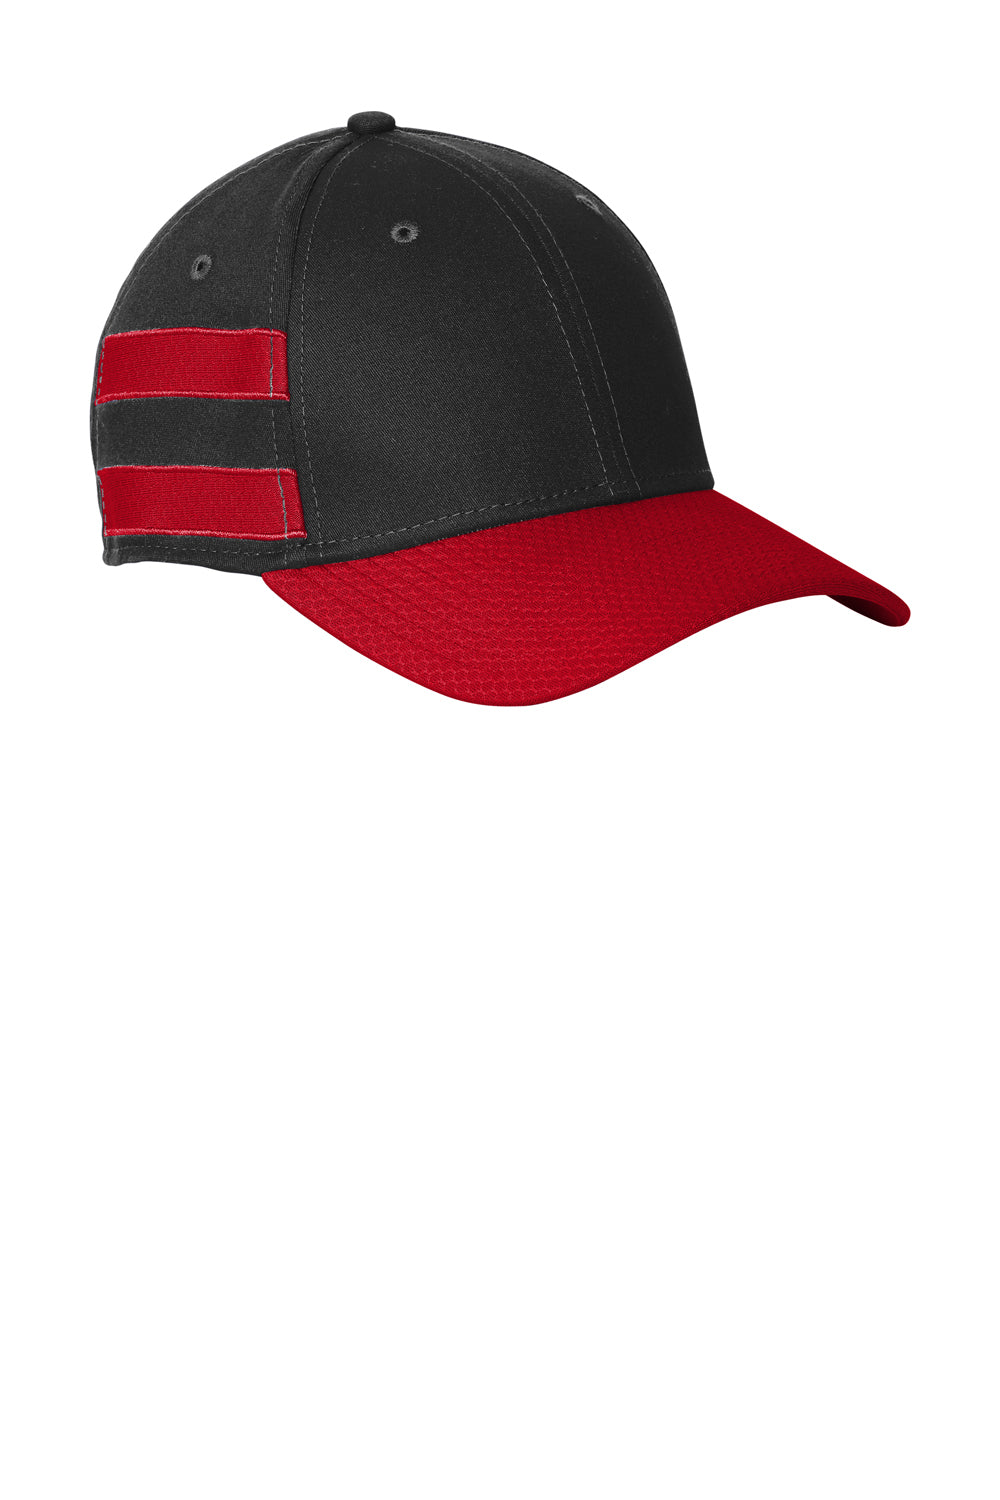 New Era NE1122 Striped Stretch Fit Hat Black/Scarlet Red Back